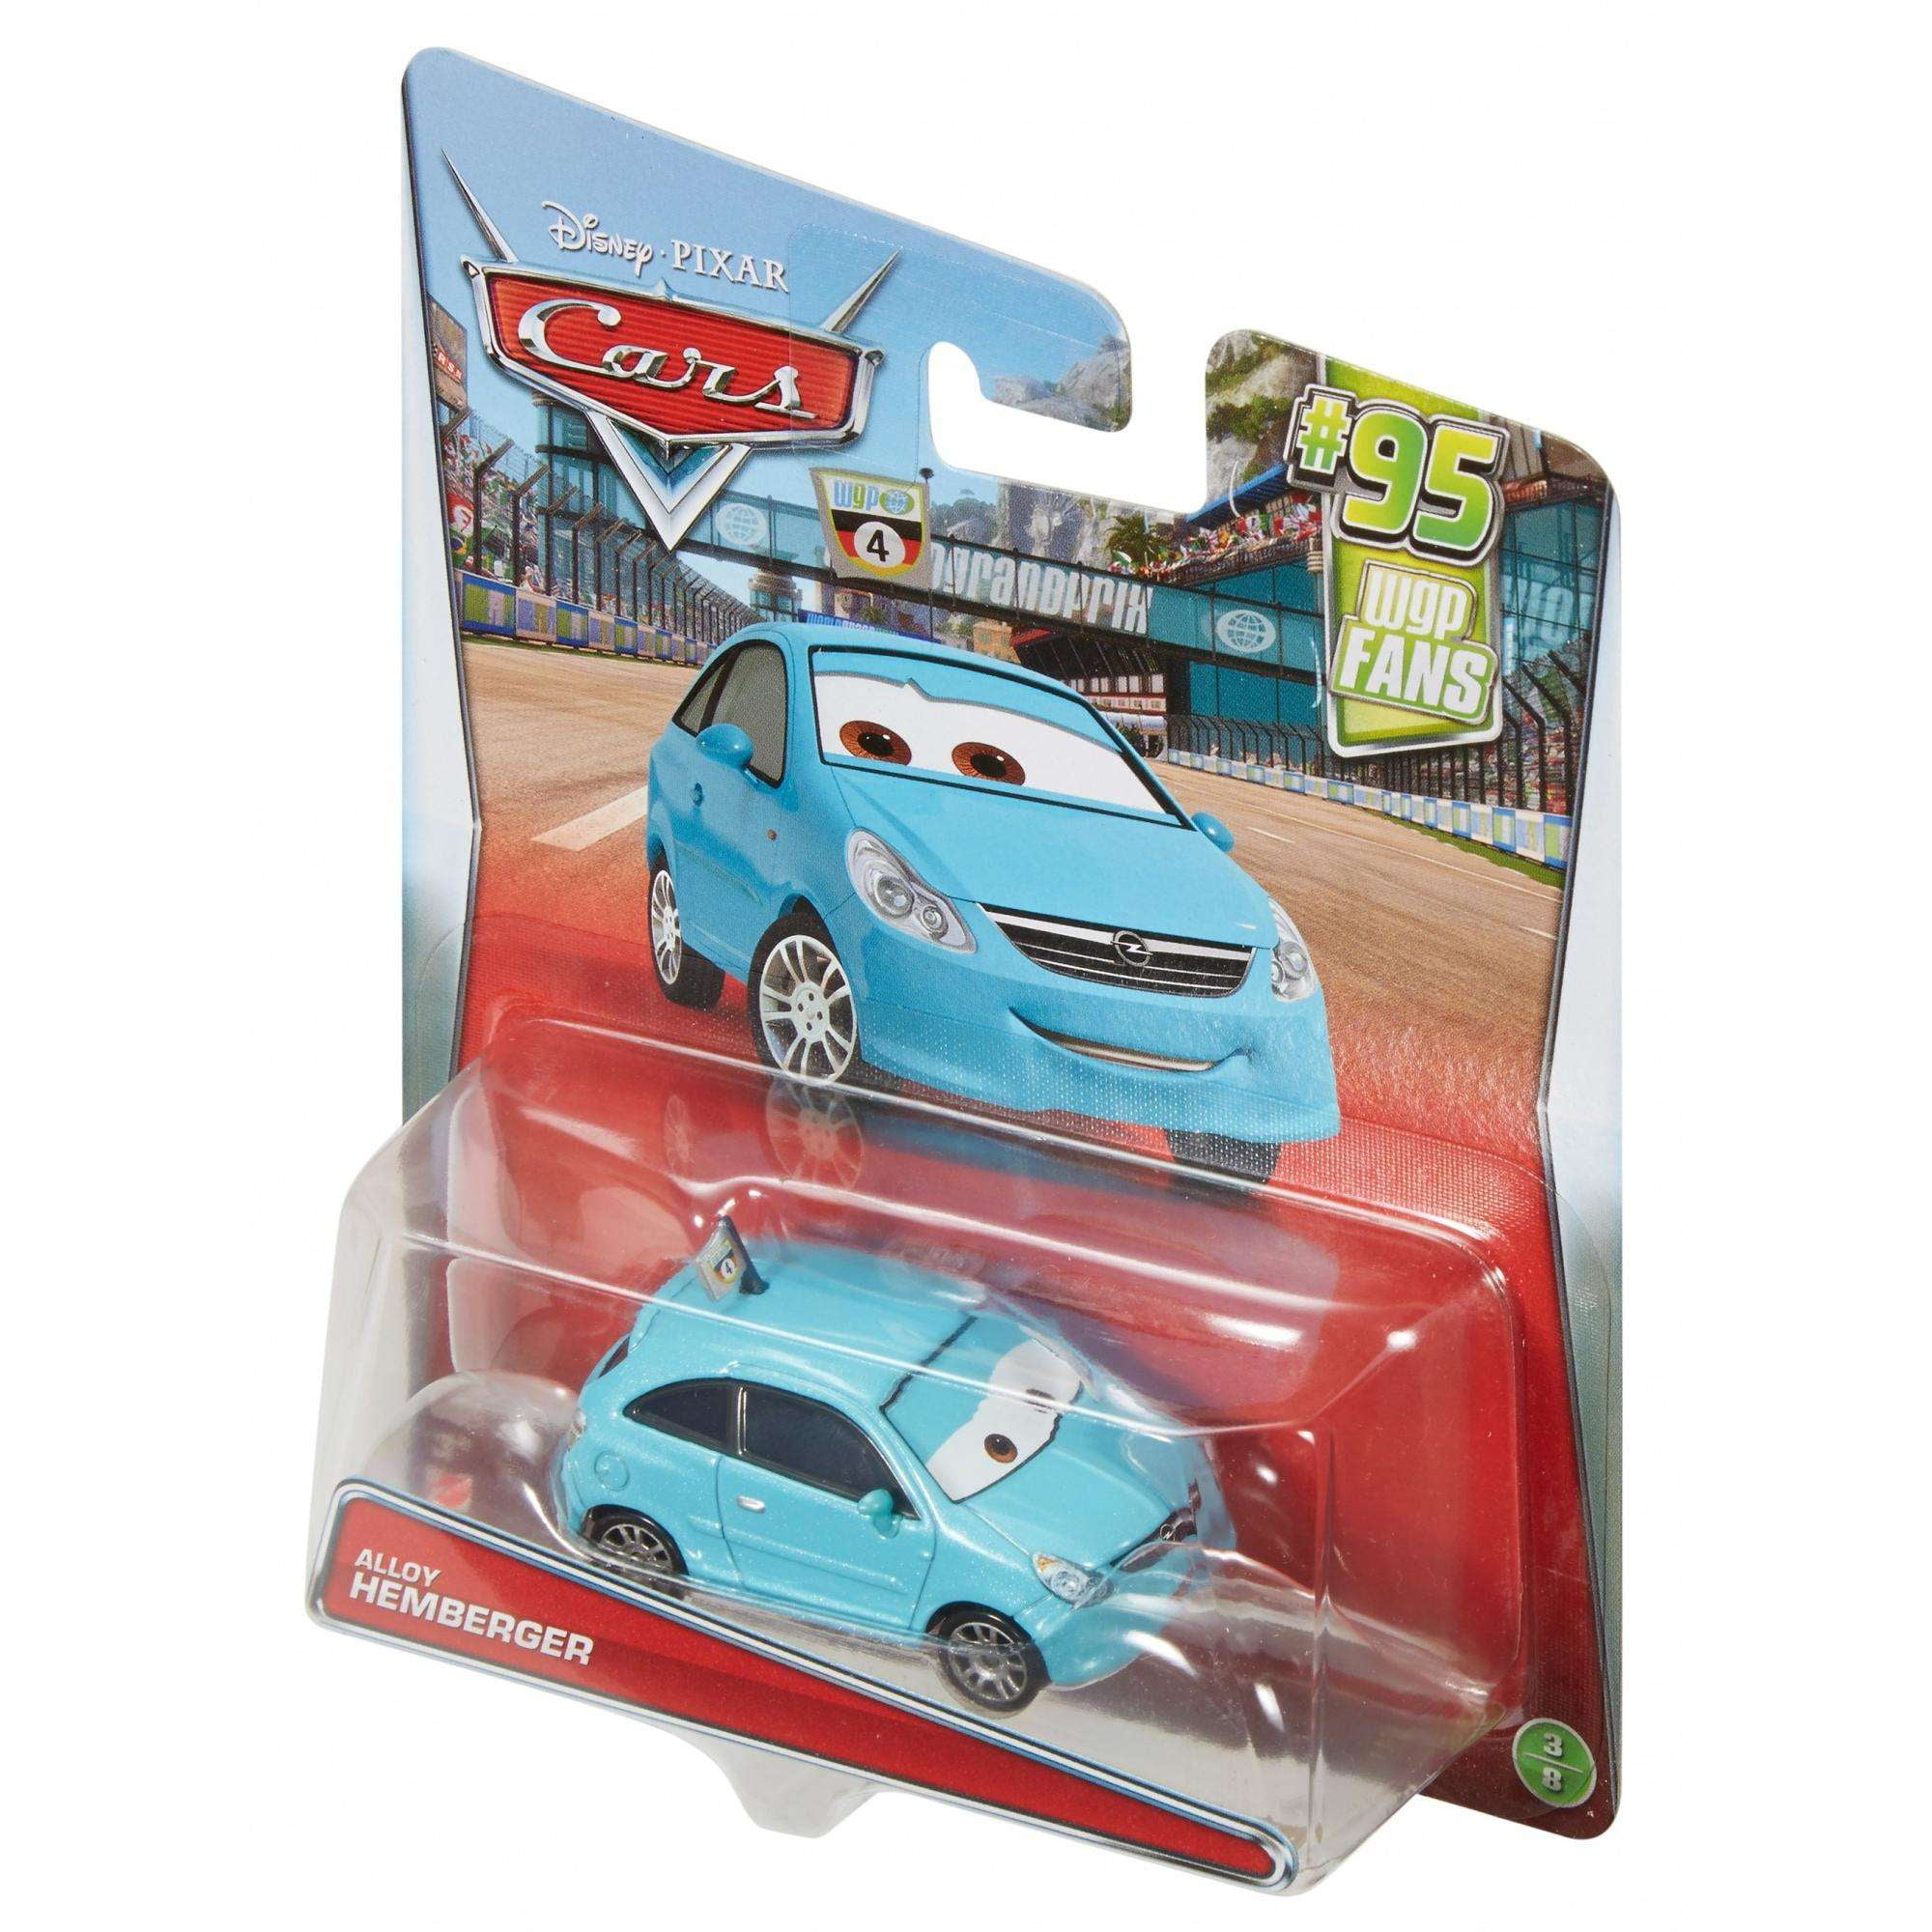 Disney Pixar Cars Alloy Hemberger 